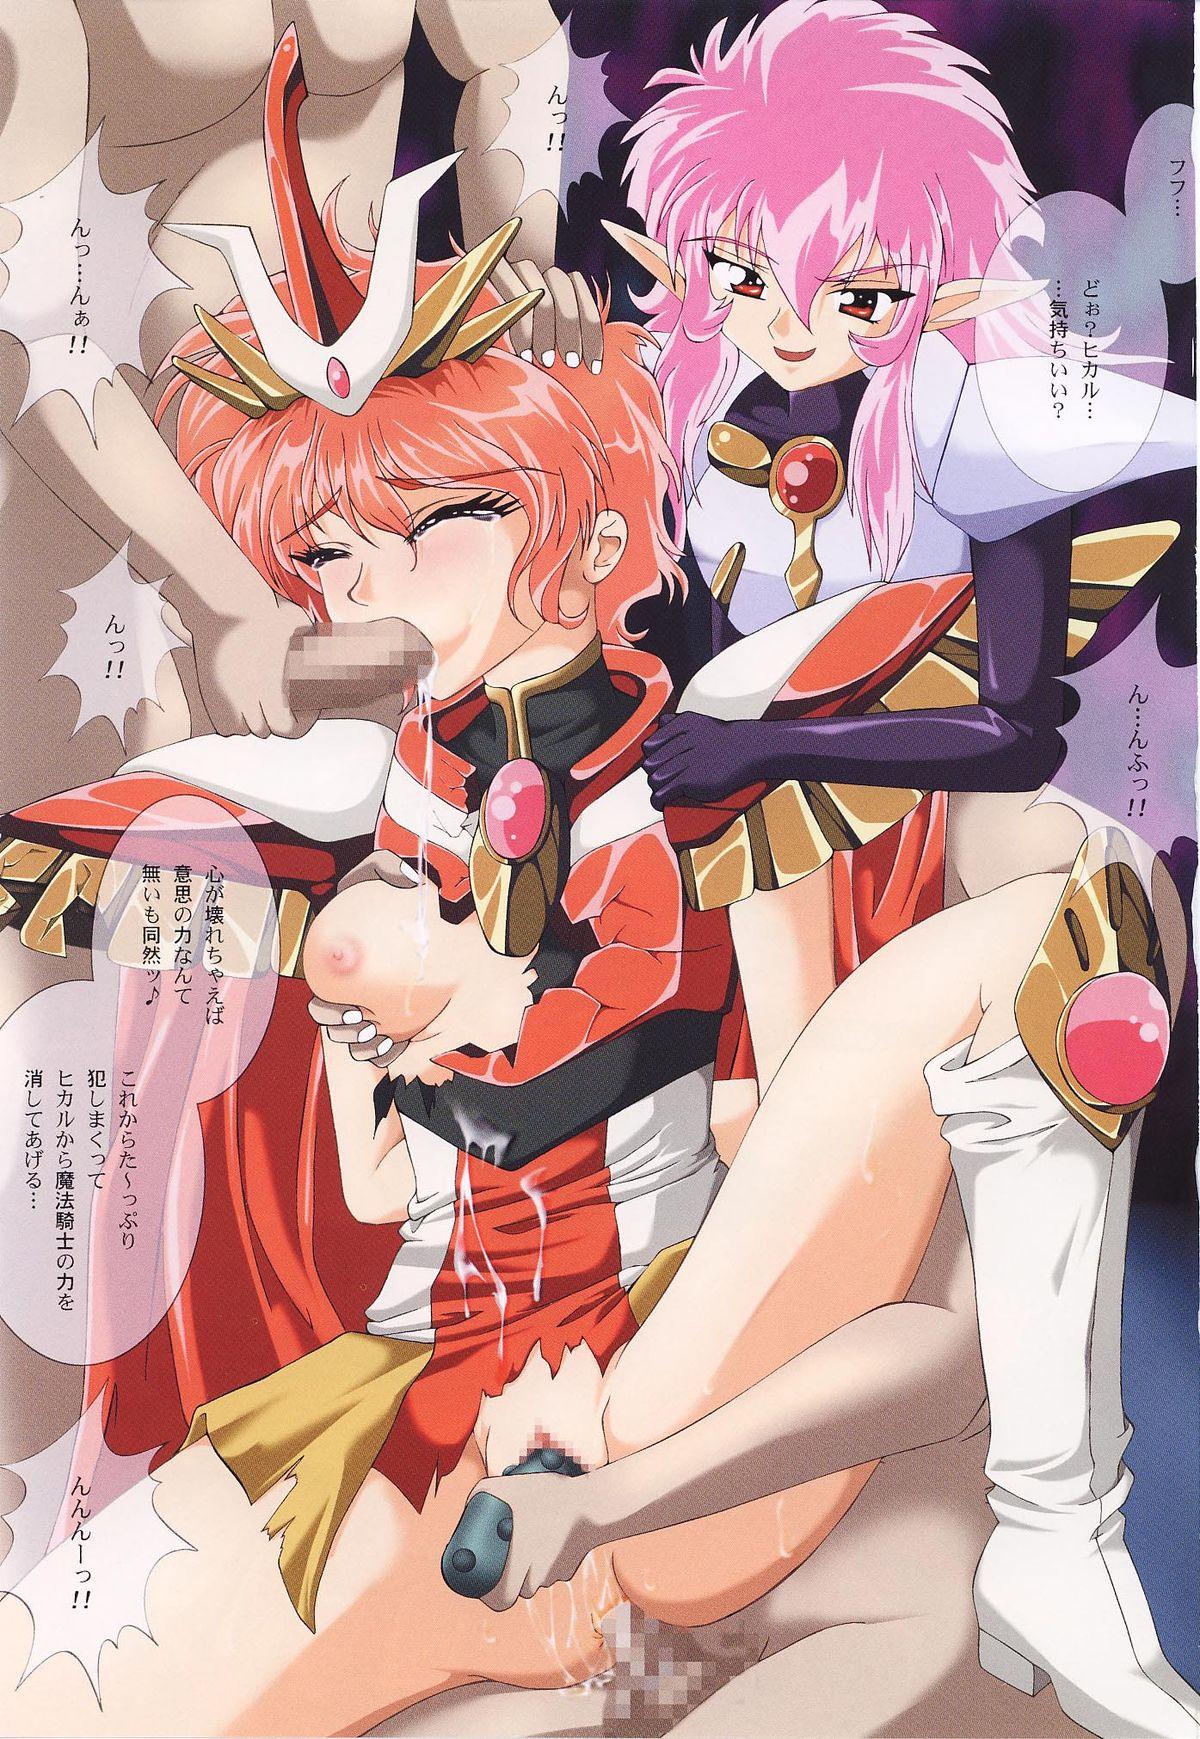 Shorts Kagami ni Mukau Shoujo - Magic knight rayearth Lord of lords ryu knight Tokyo underground Hot Teen - Page 3